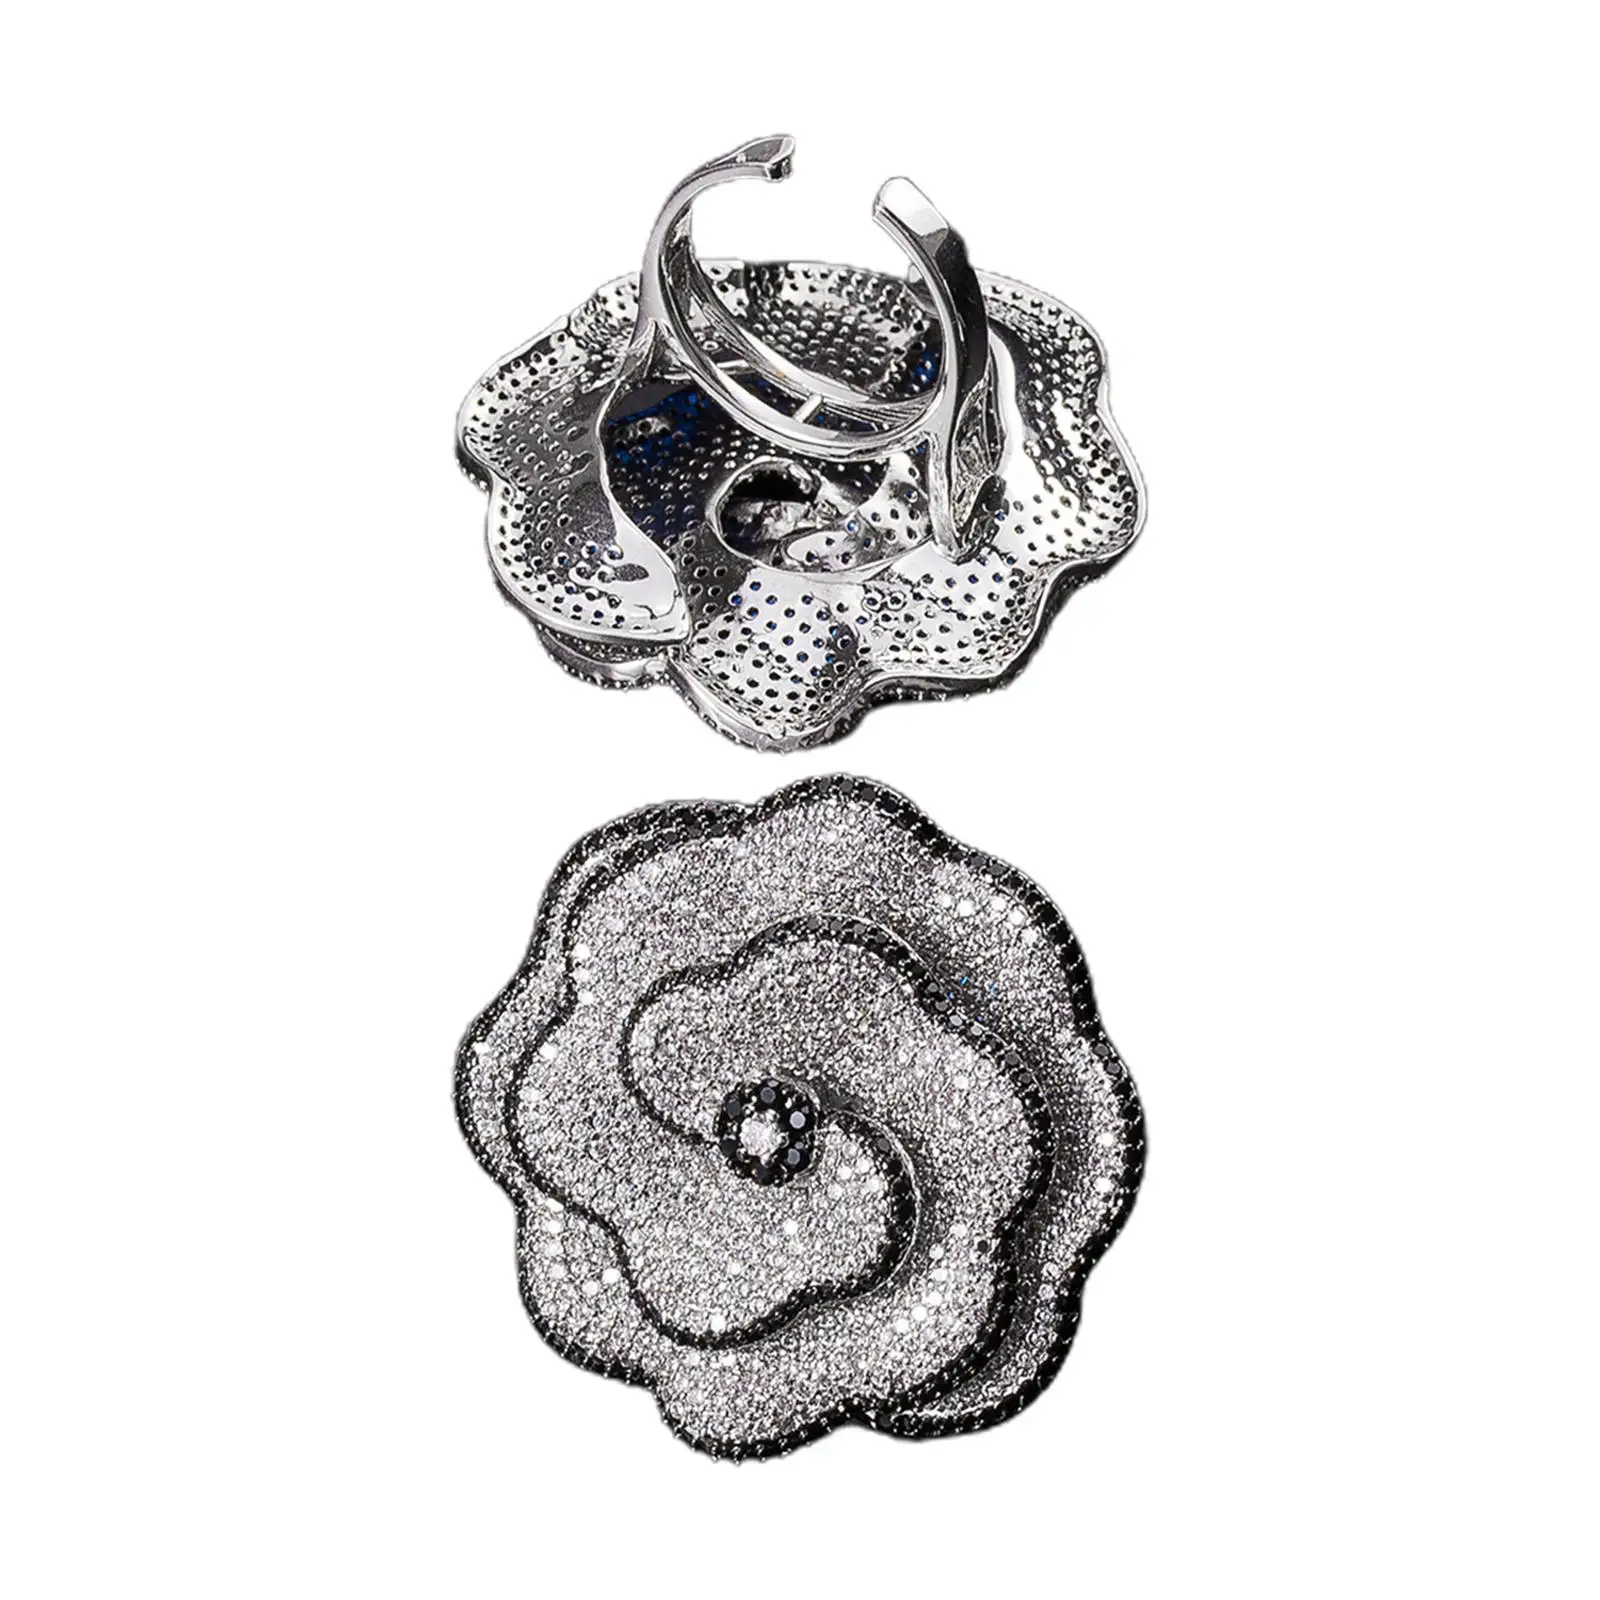 Open Rings Ring Elegant Cubic Zirconia Big Jewelry Metal Adjustable for Anniversaries Statement Engagement Party